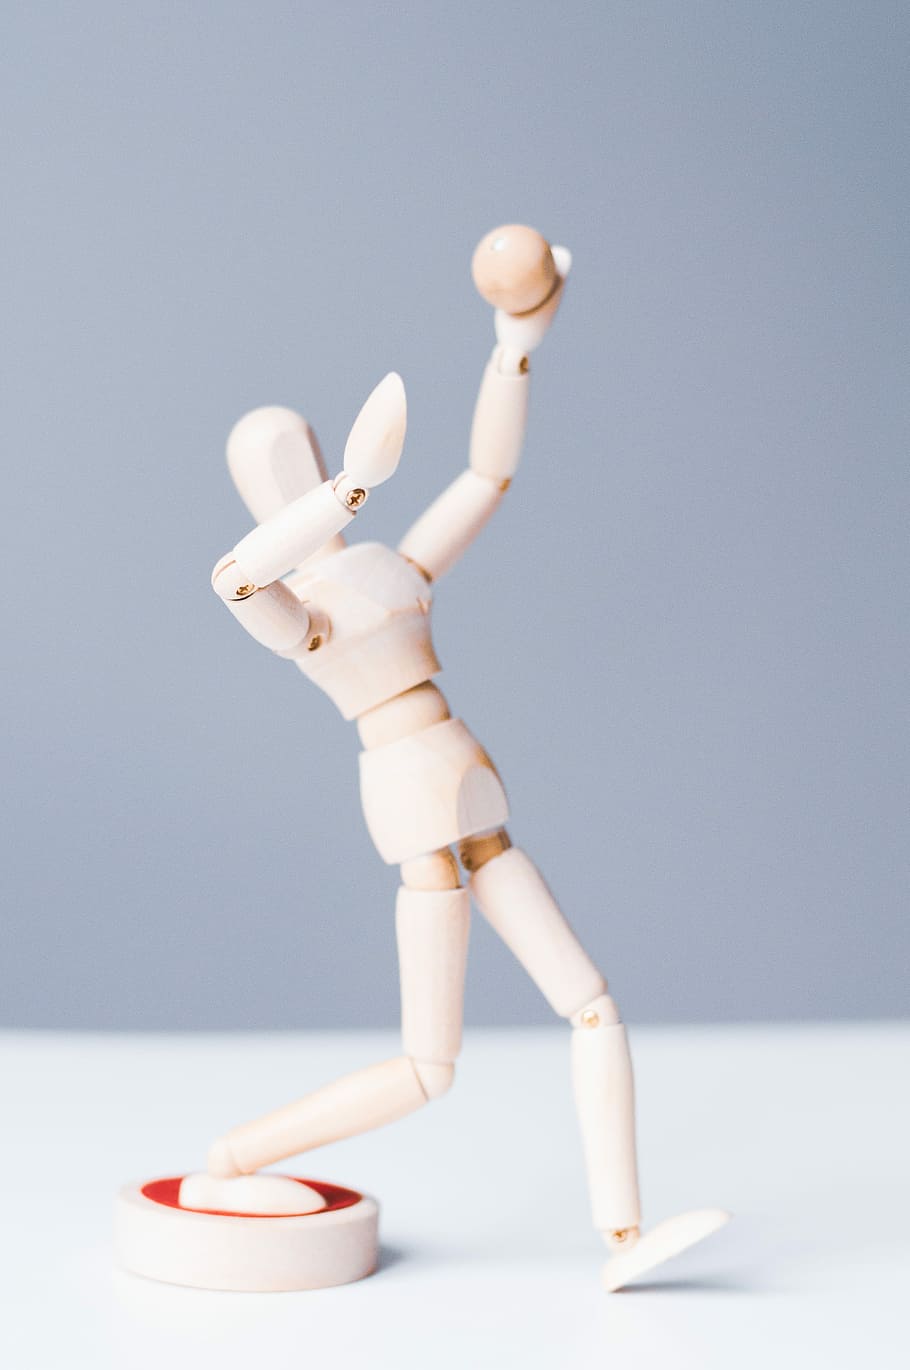 brown manikin figure on white surface, white wooden puppet, ball, HD wallpaper